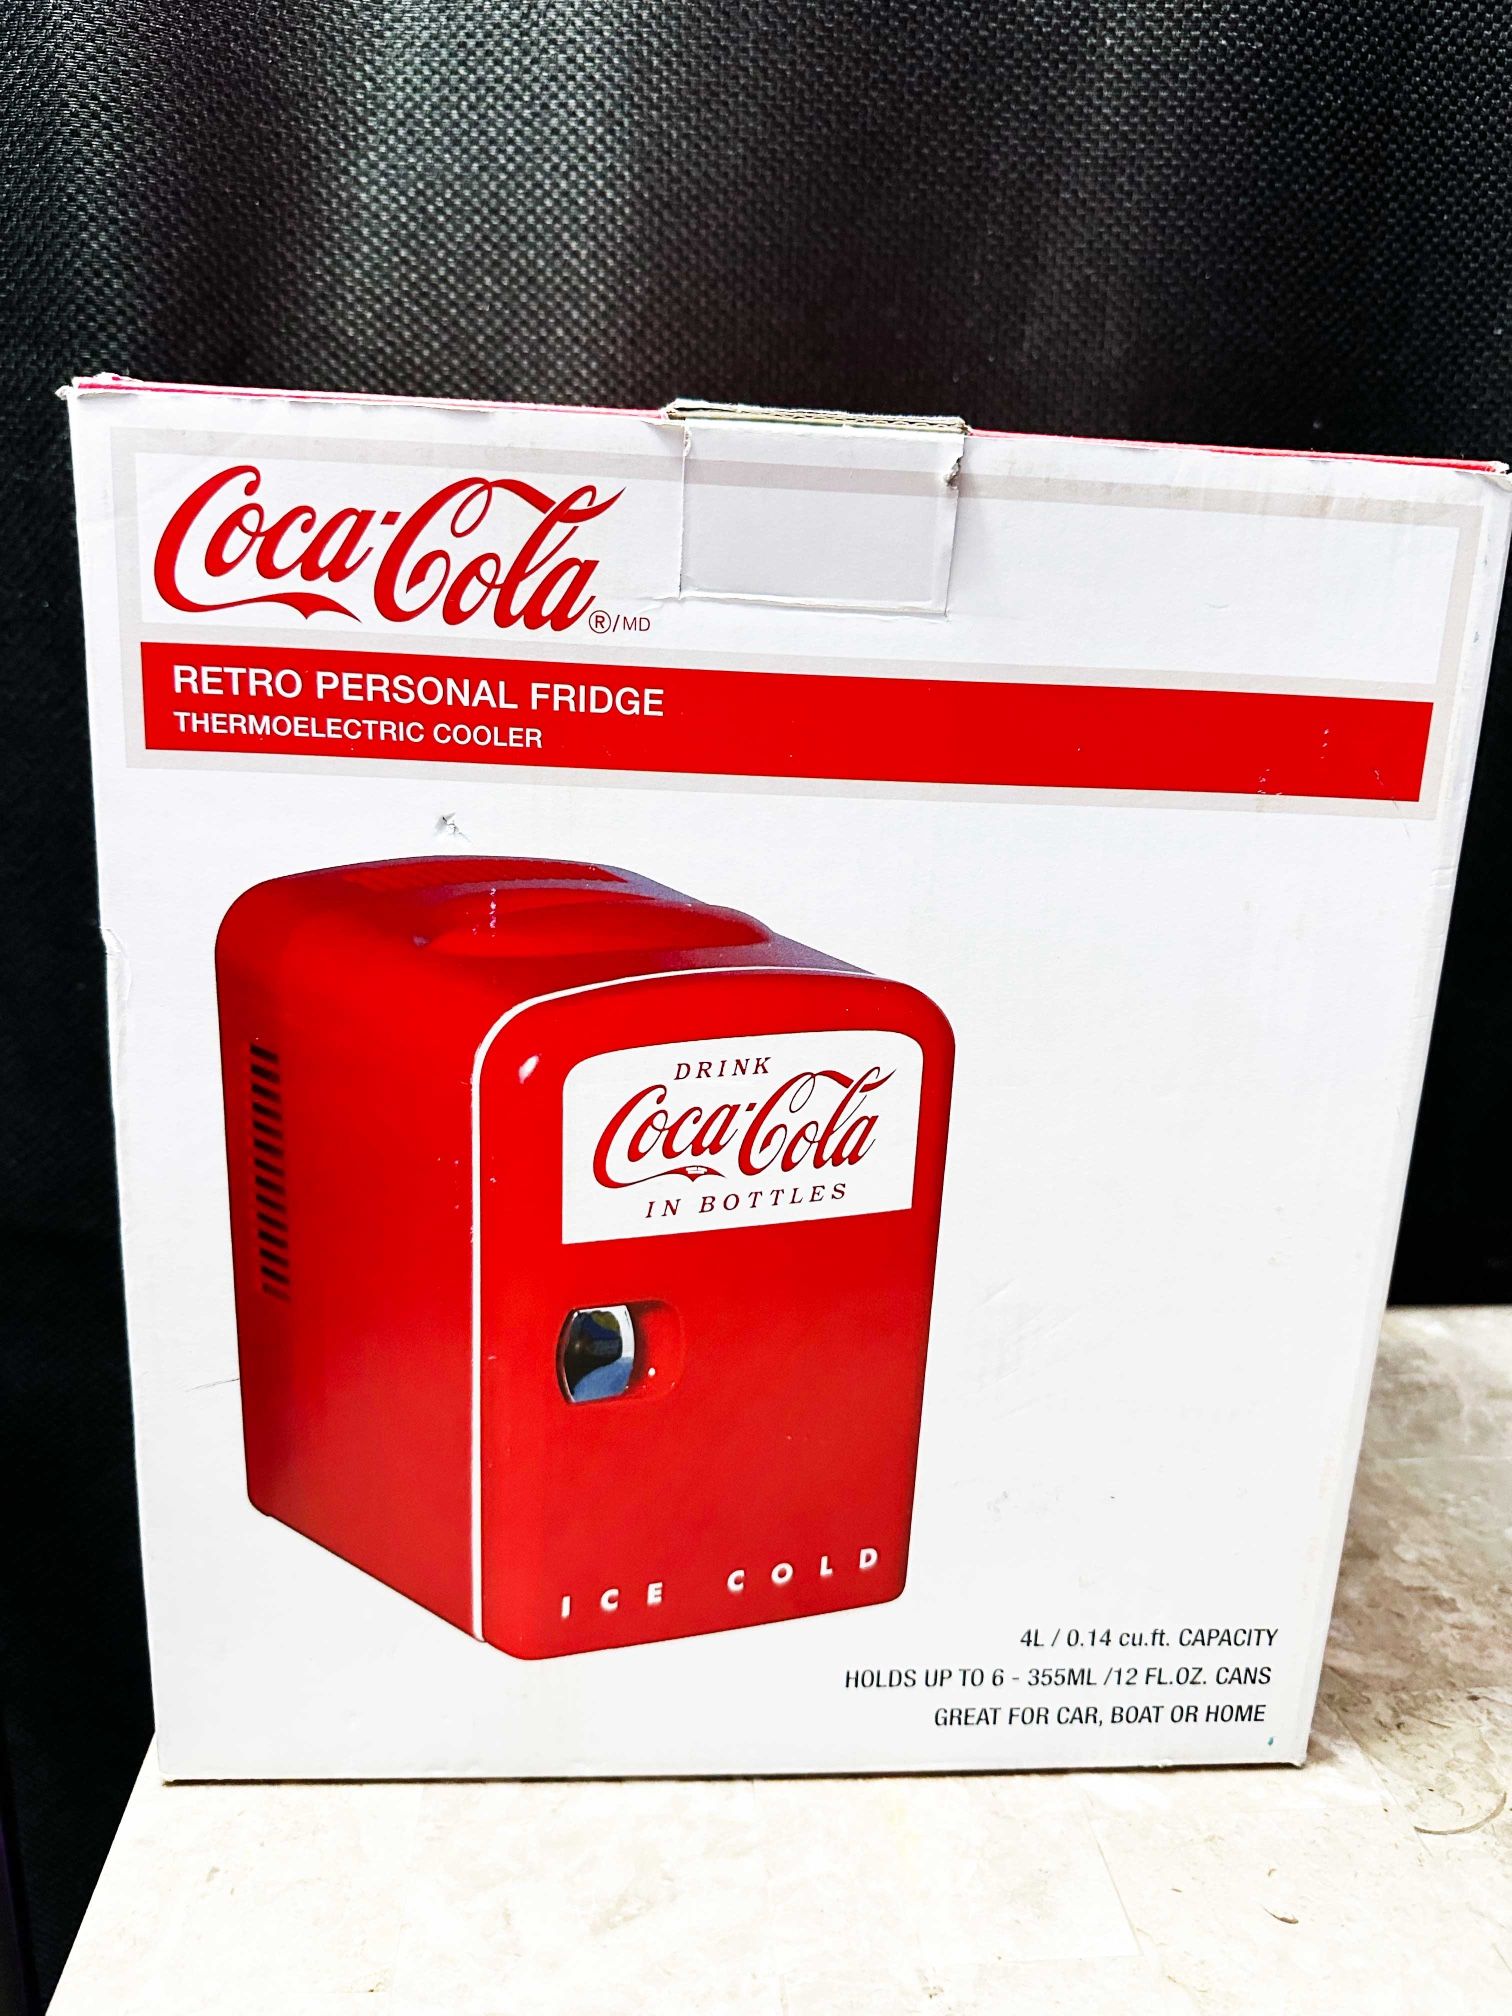 Coca-Cola Personal Fridge